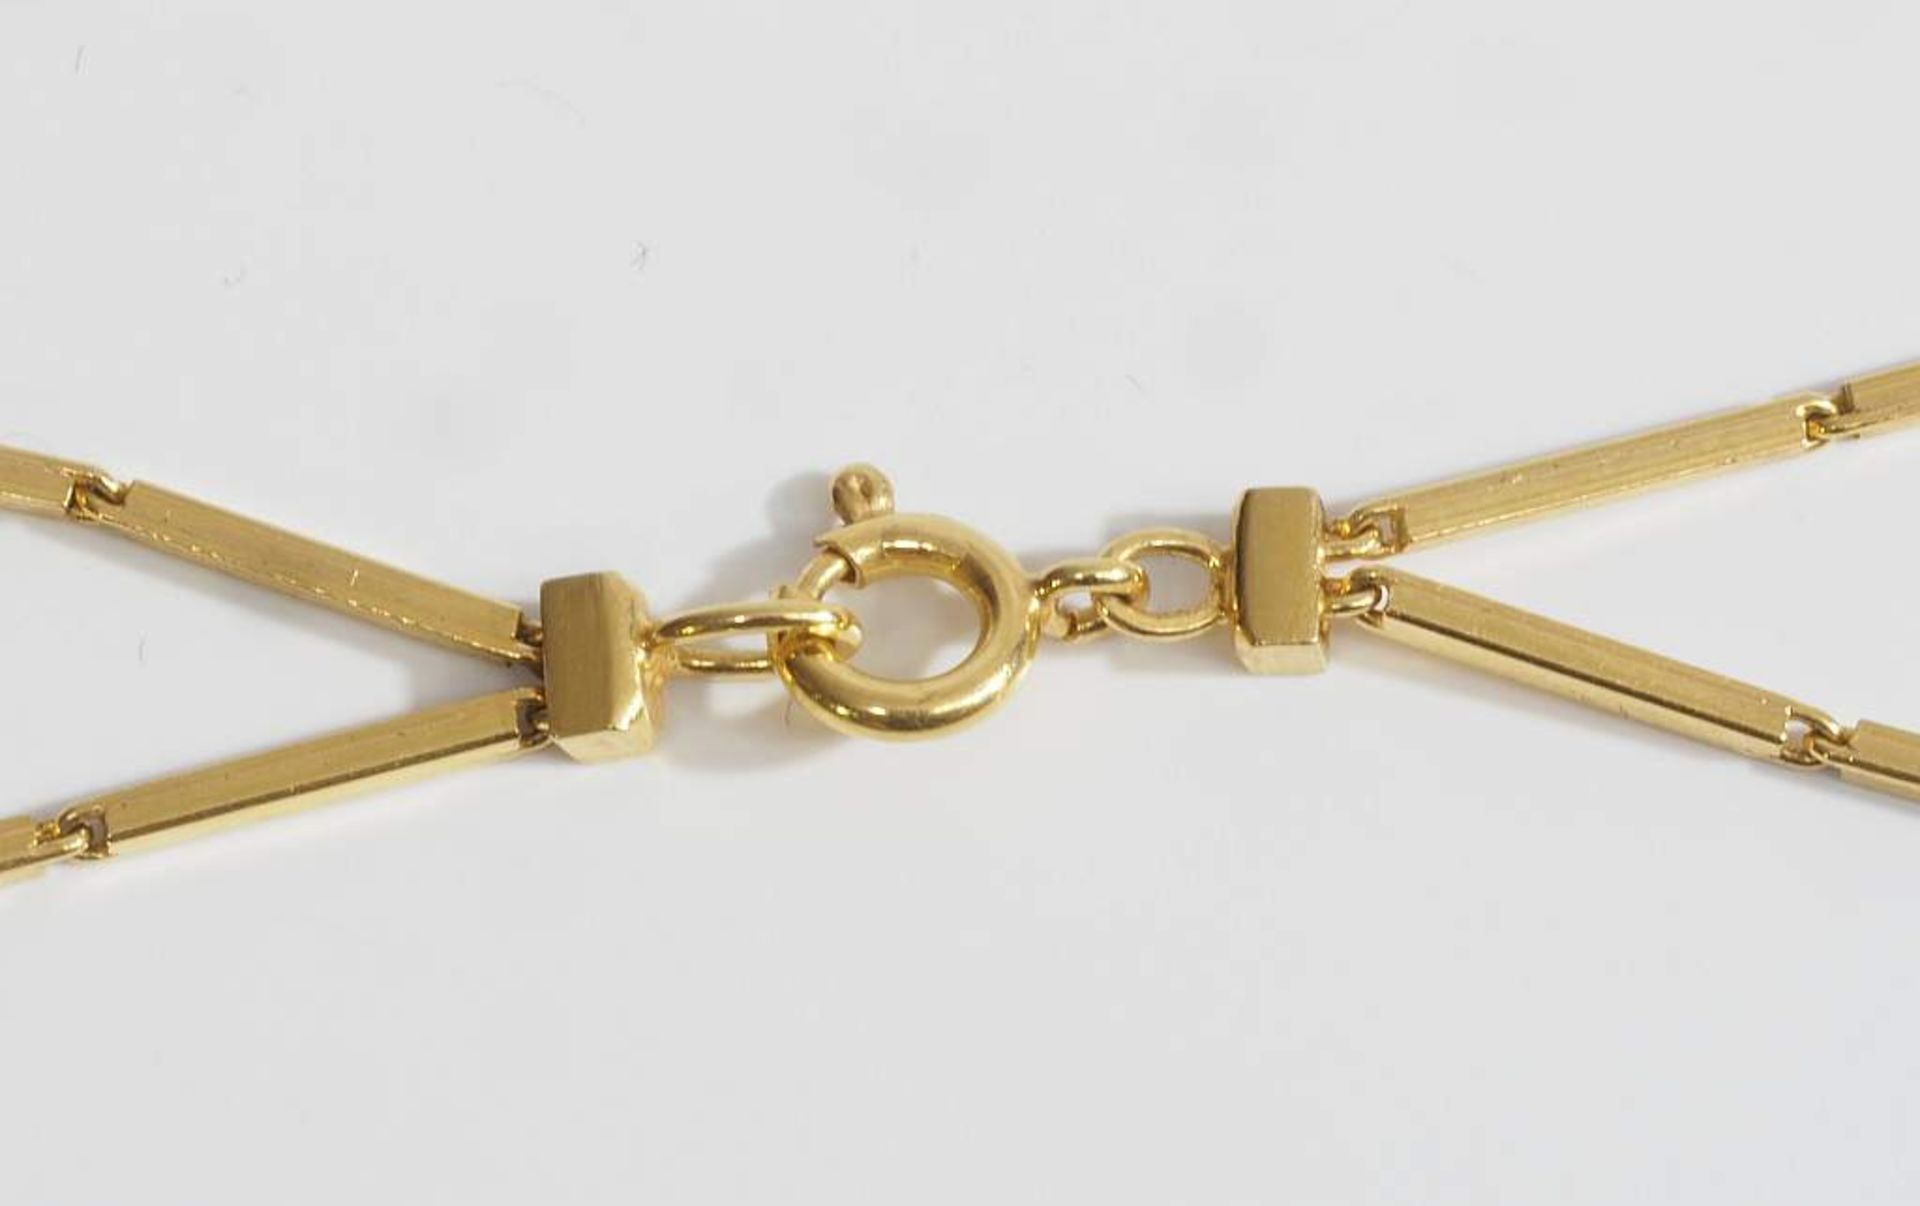 Zweireihige Stabkette.Zweireihige Stabkette mit Ringösenverschluß. 750er Gelbgold, Länge ca. 78 - Image 5 of 5